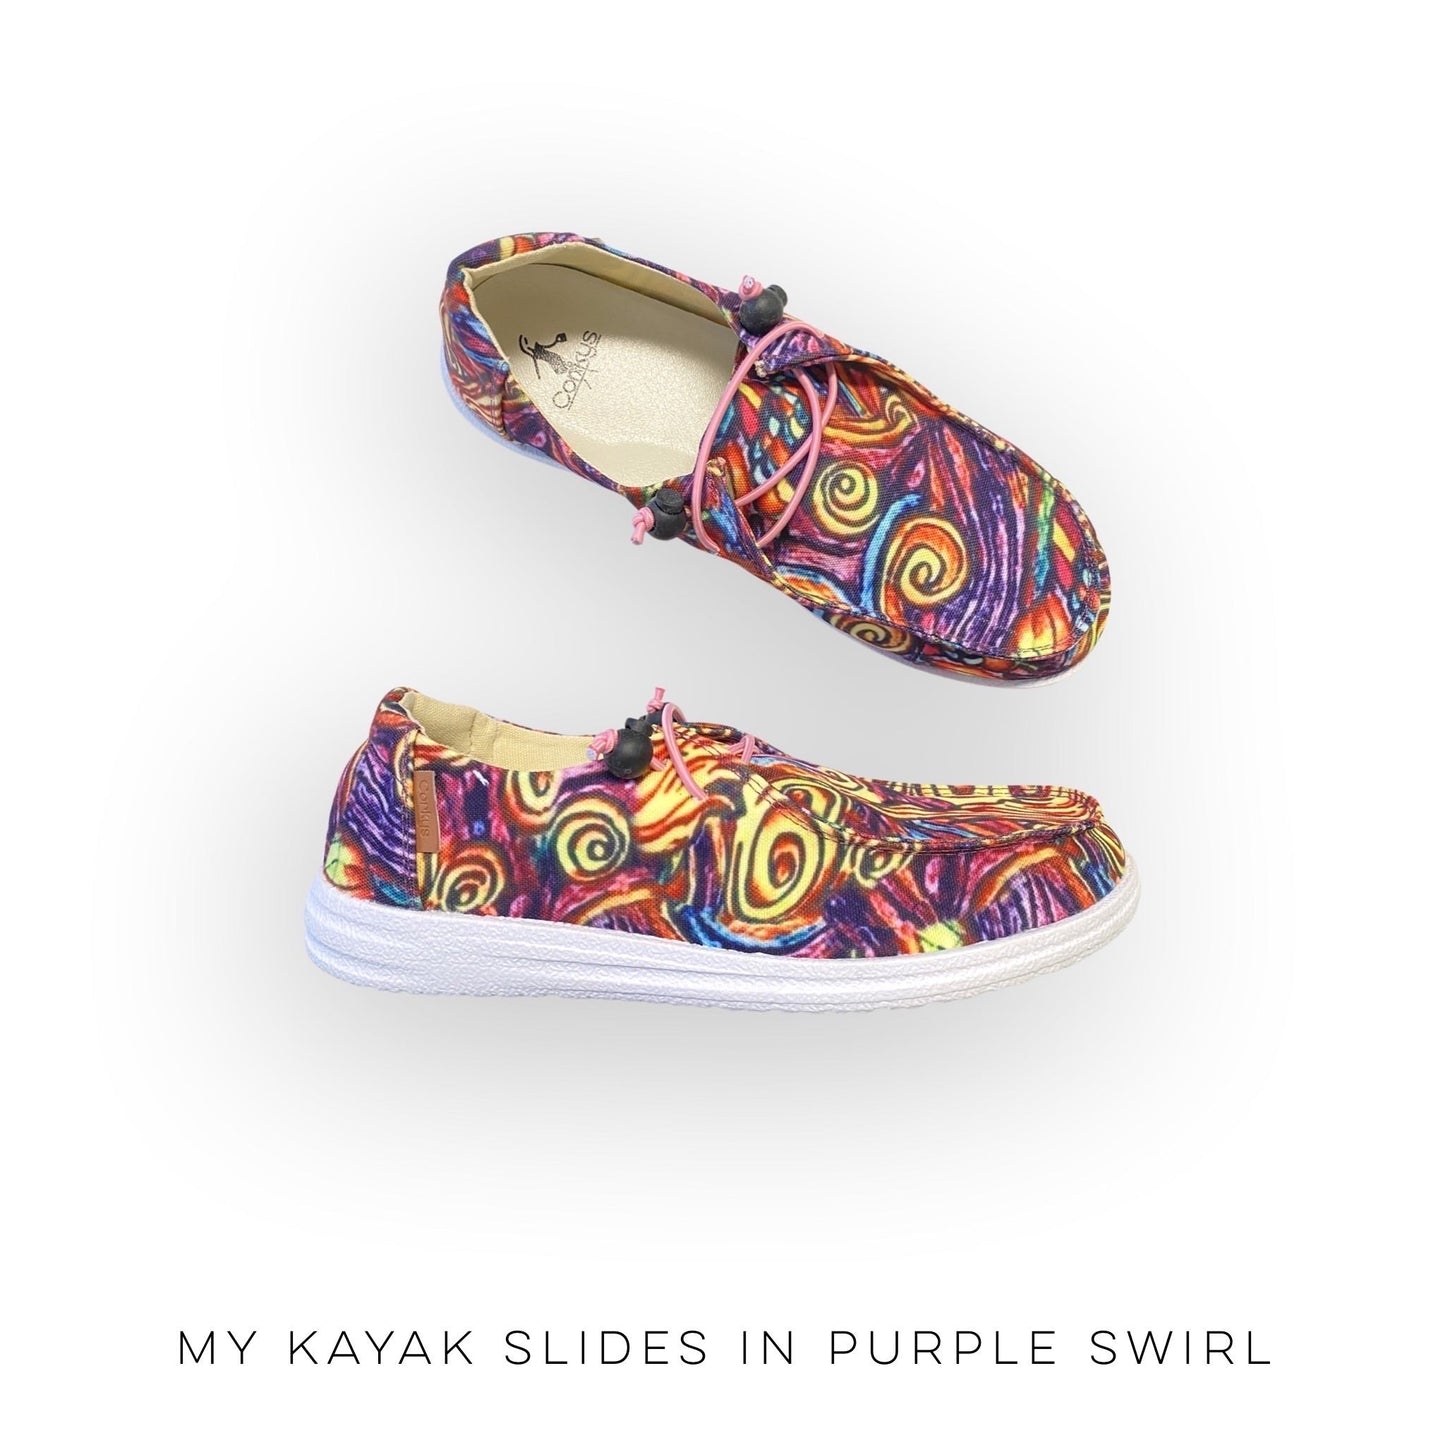 My Kayak Slides in Purple Swirl